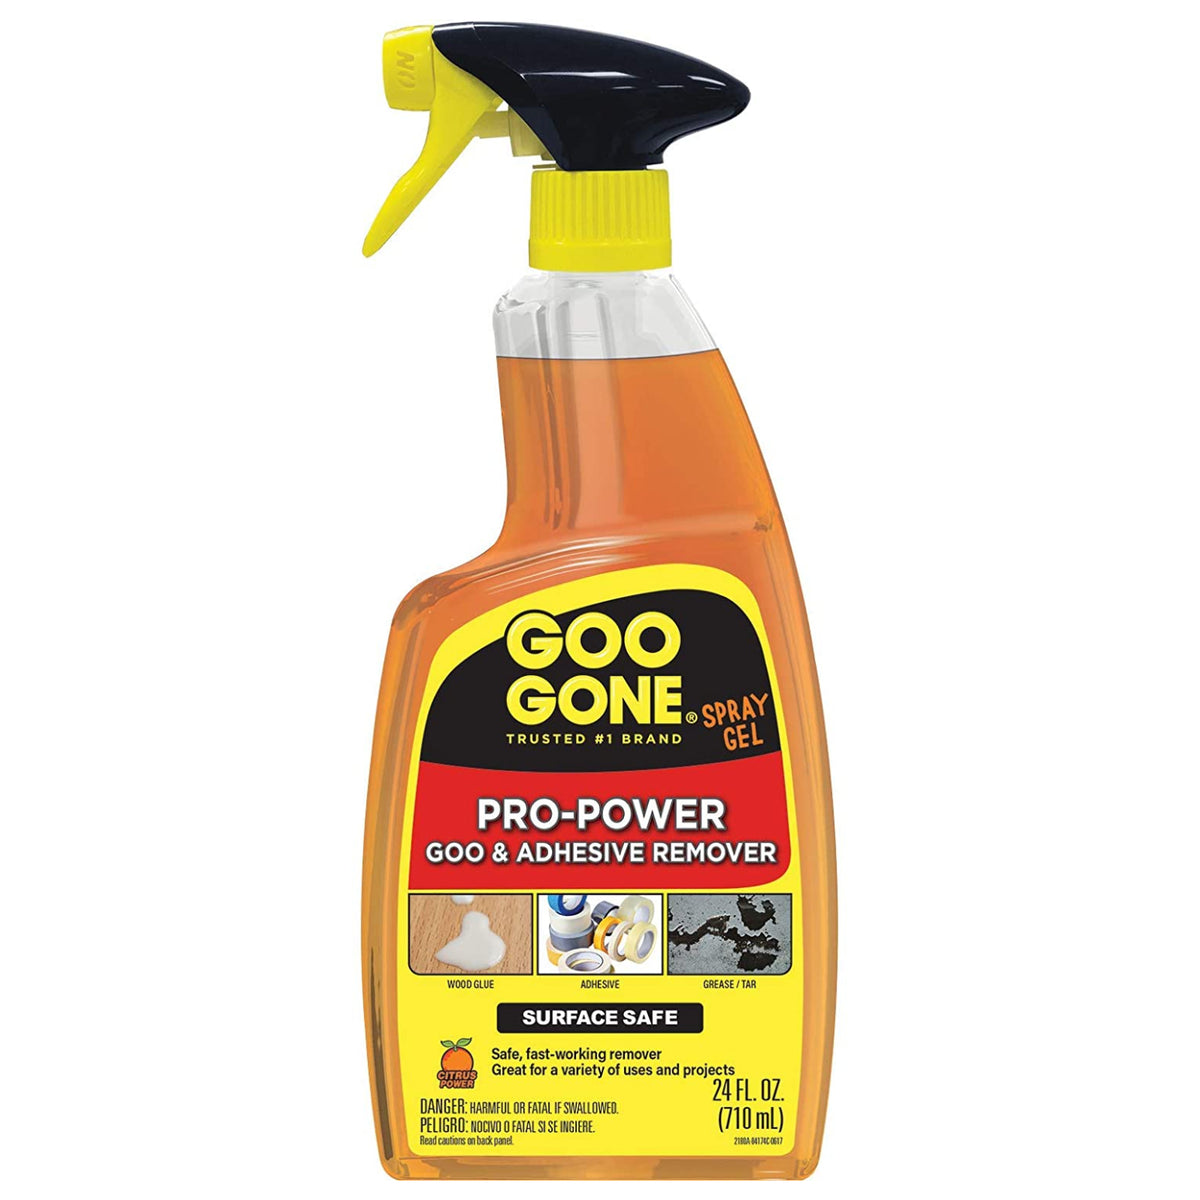 Goo Gone 2080A Pro-Power Goo & Adhesive Remover Spray Gel, 24 Oz